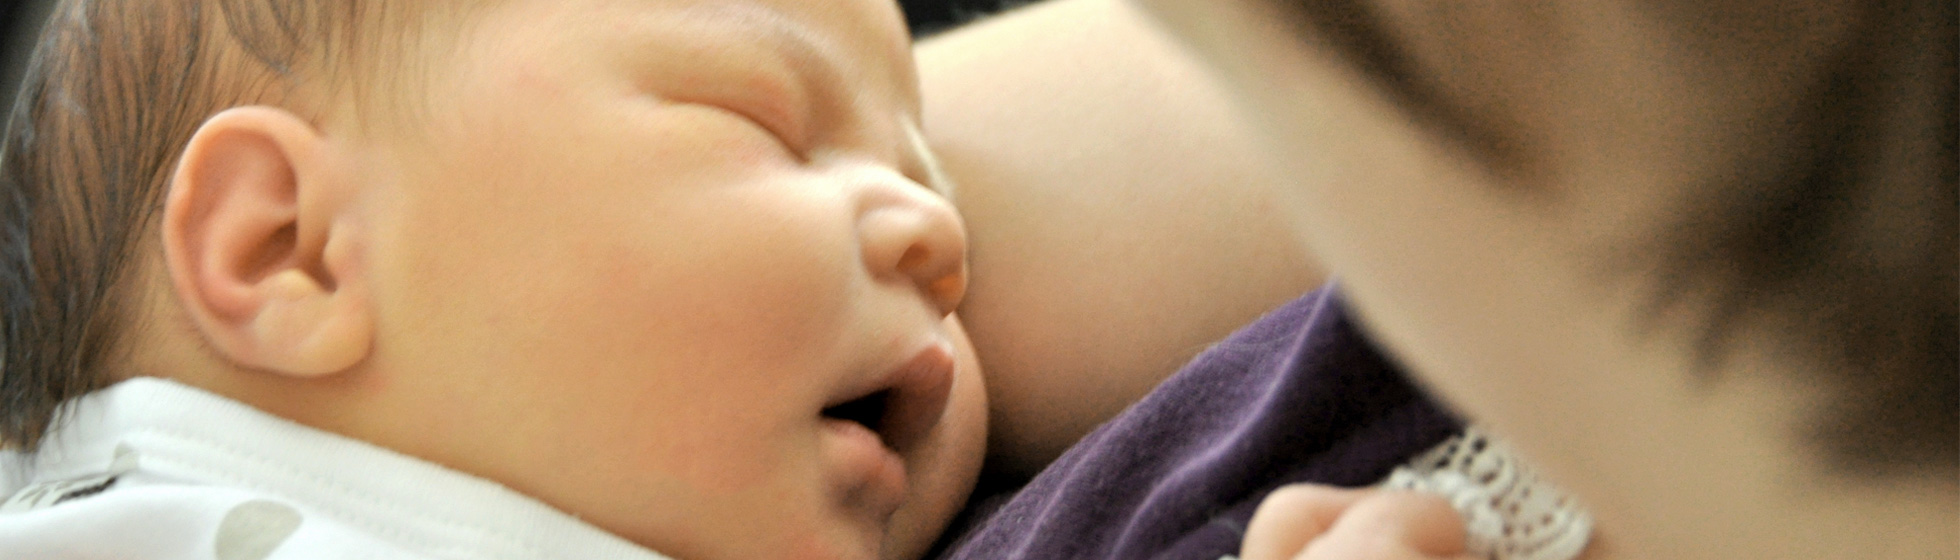 Mother having cuddles with newborn baby Archie Seeto